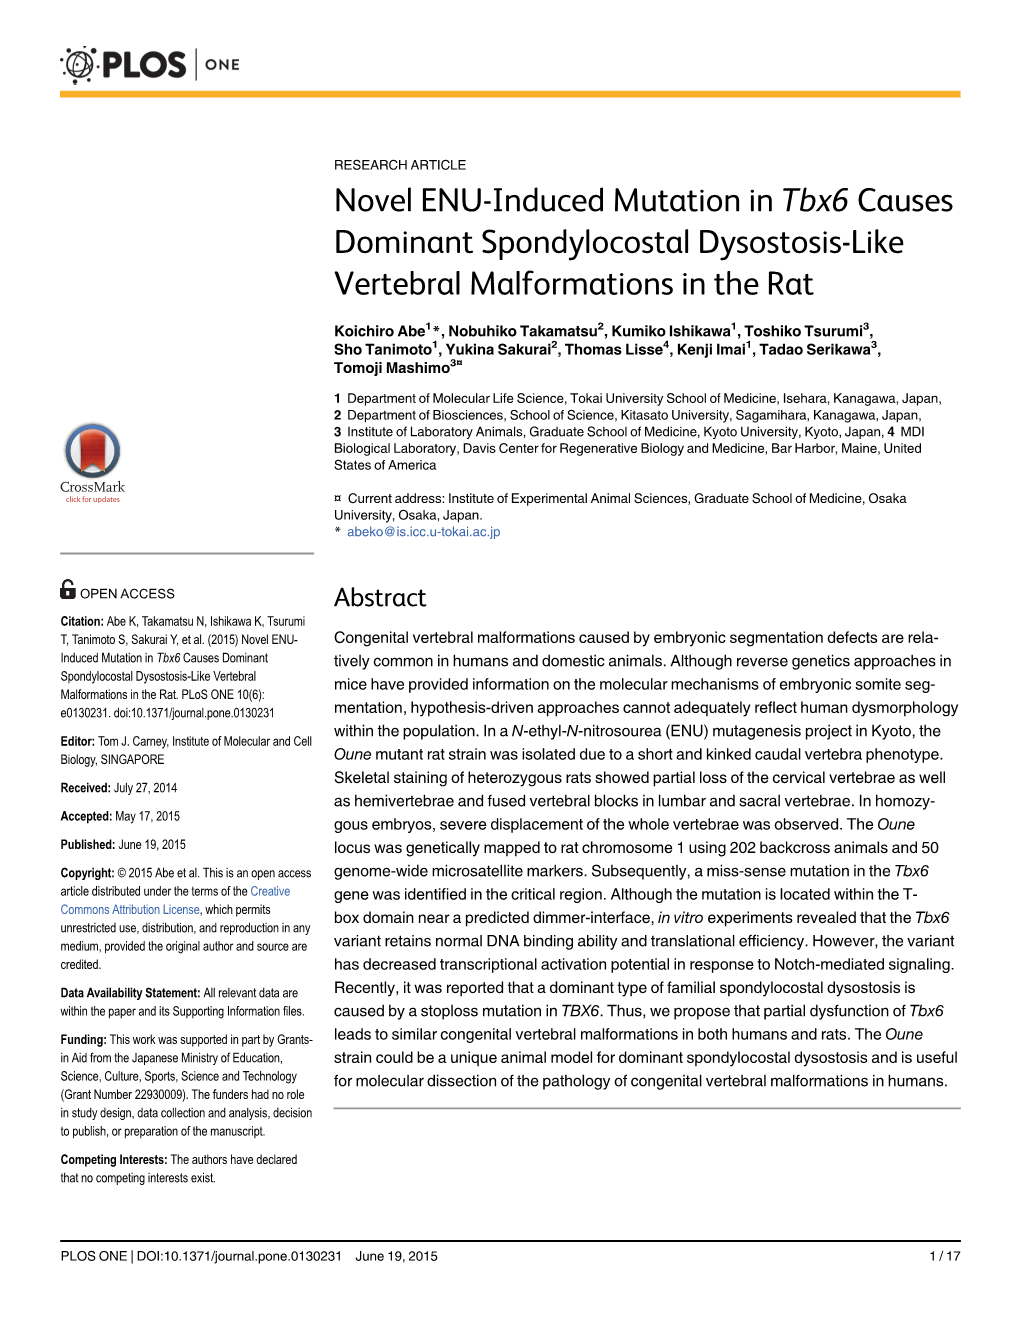 Novel ENU-Induced Mutation in Tbx6 Causes Dominant Spondylocostal Dysostosis-Like Vertebral Malformations in the Rat